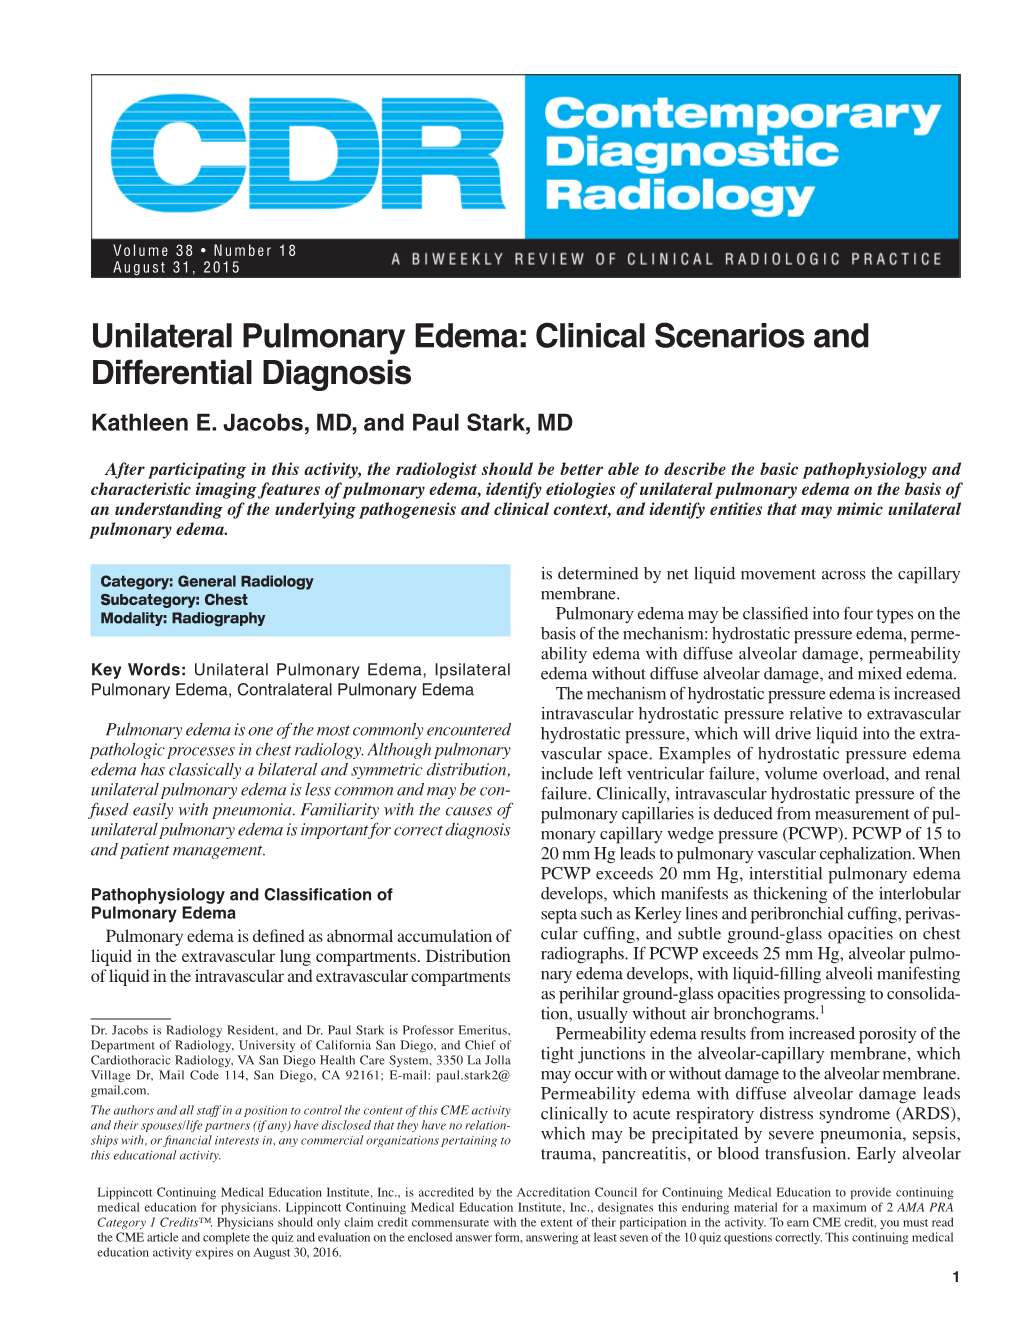 Unilateral Pulmonary Edema: Clinical Scenarios and Differential Diagnosis Kathleen E